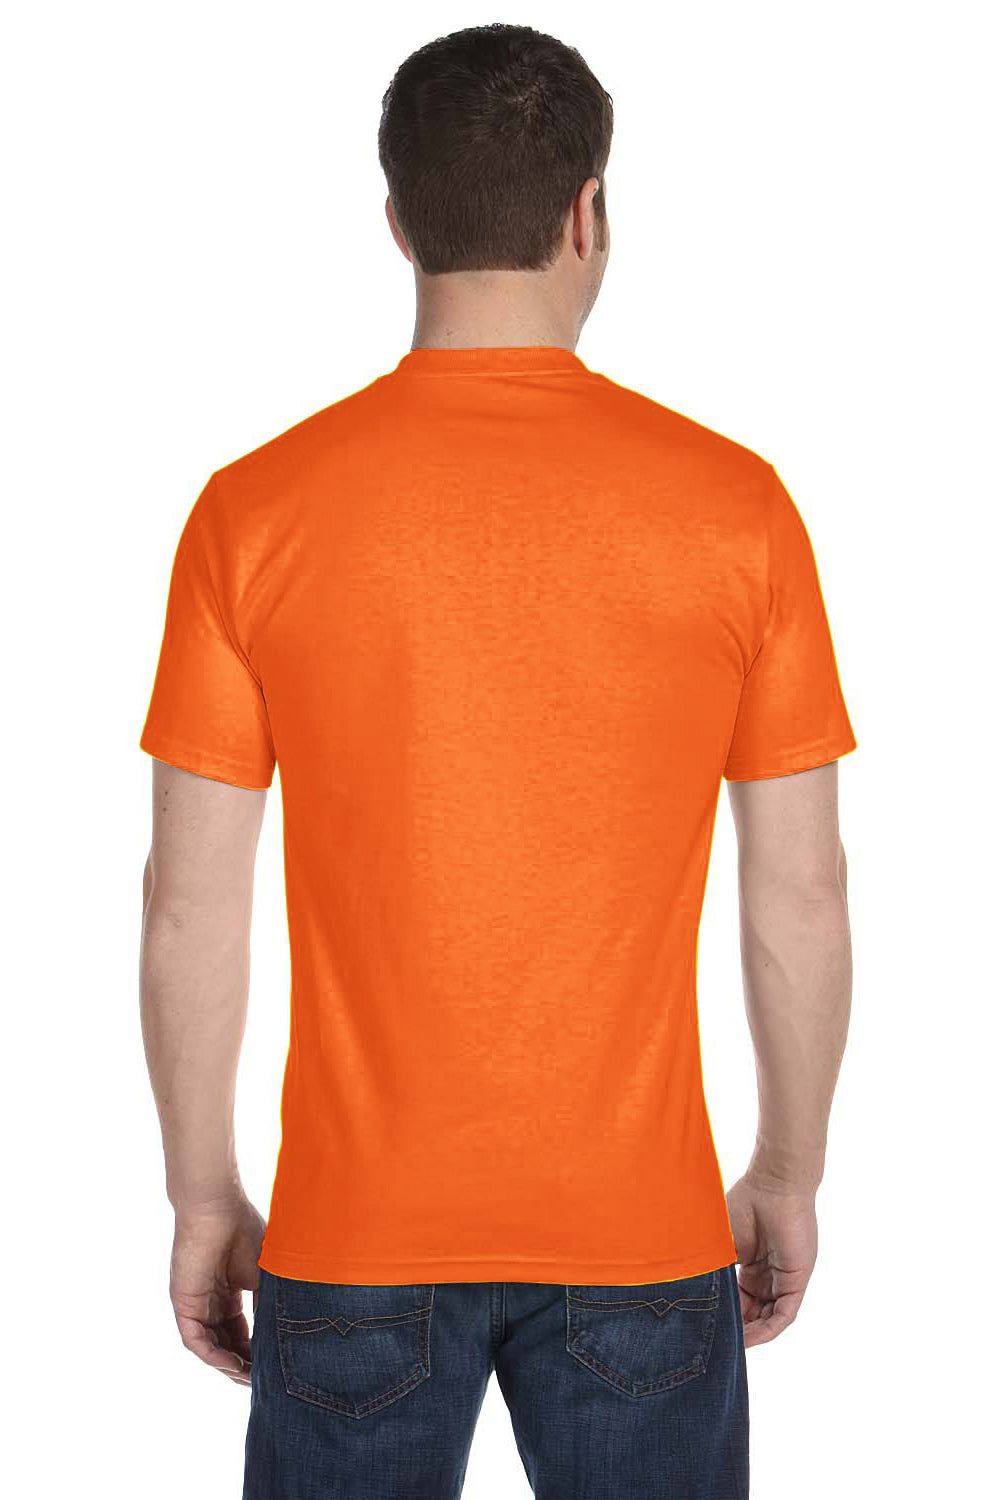 Gildan G800 Mens DryBlend Moisture Wicking Short Sleeve Crewneck T-Shirt Safety Orange Back